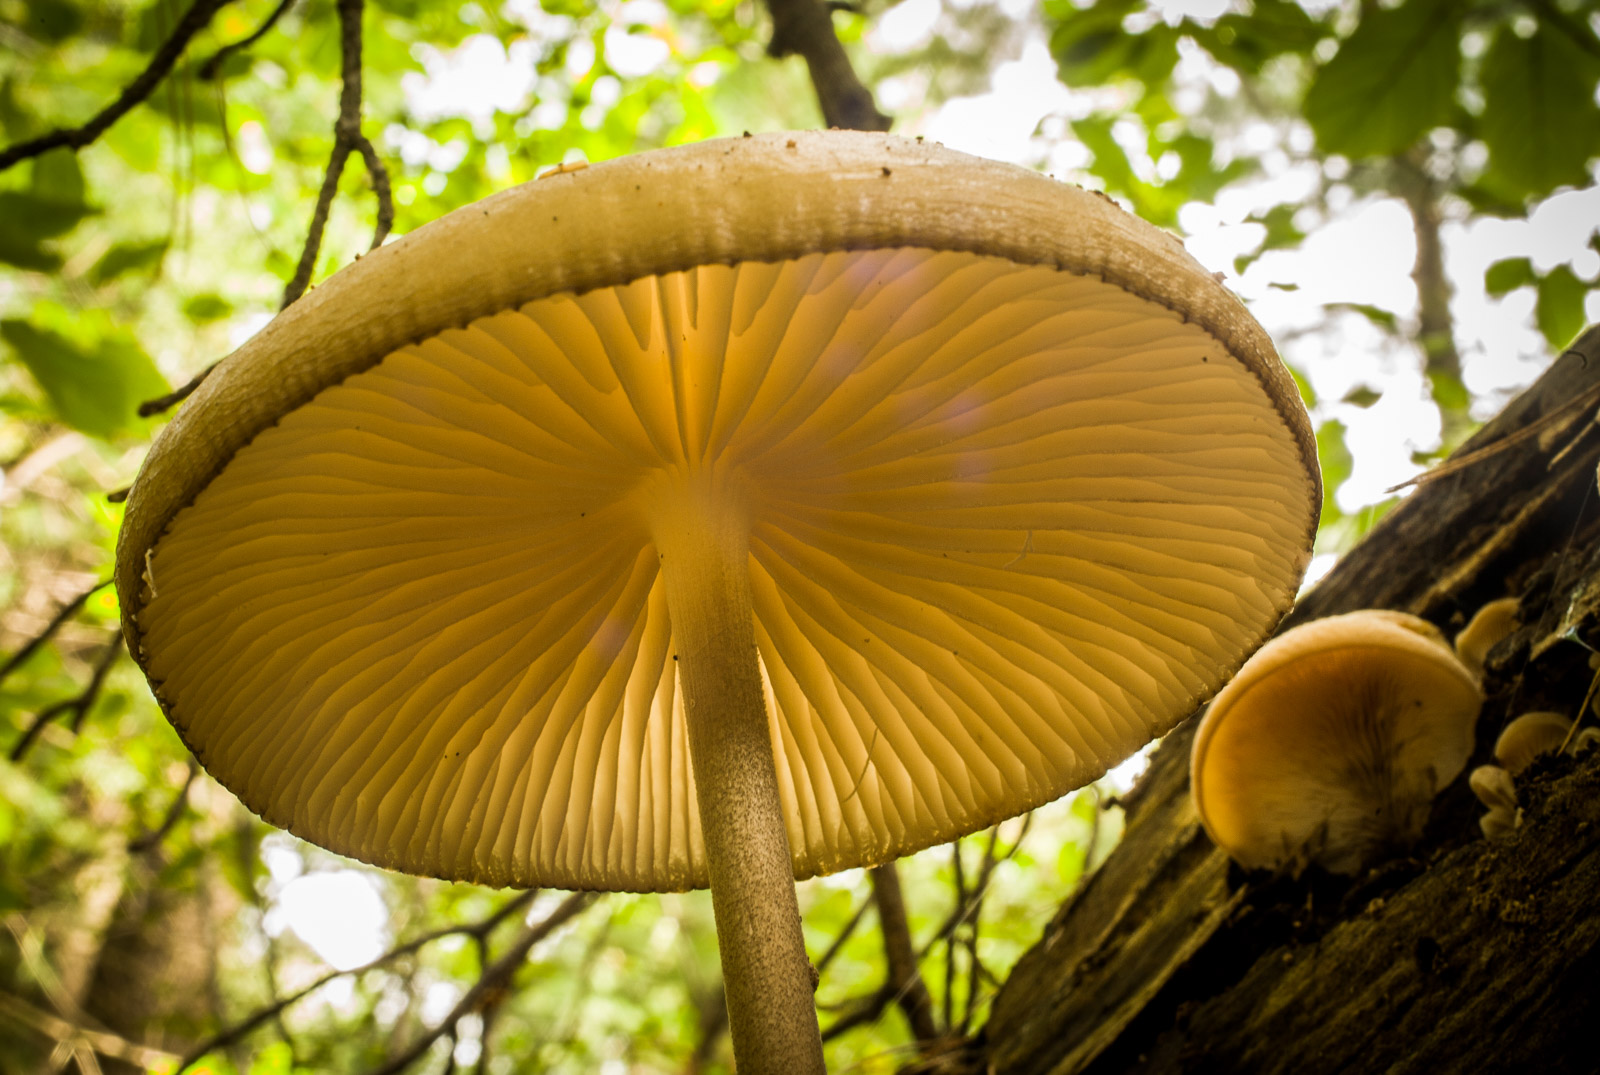 Mushroom from below